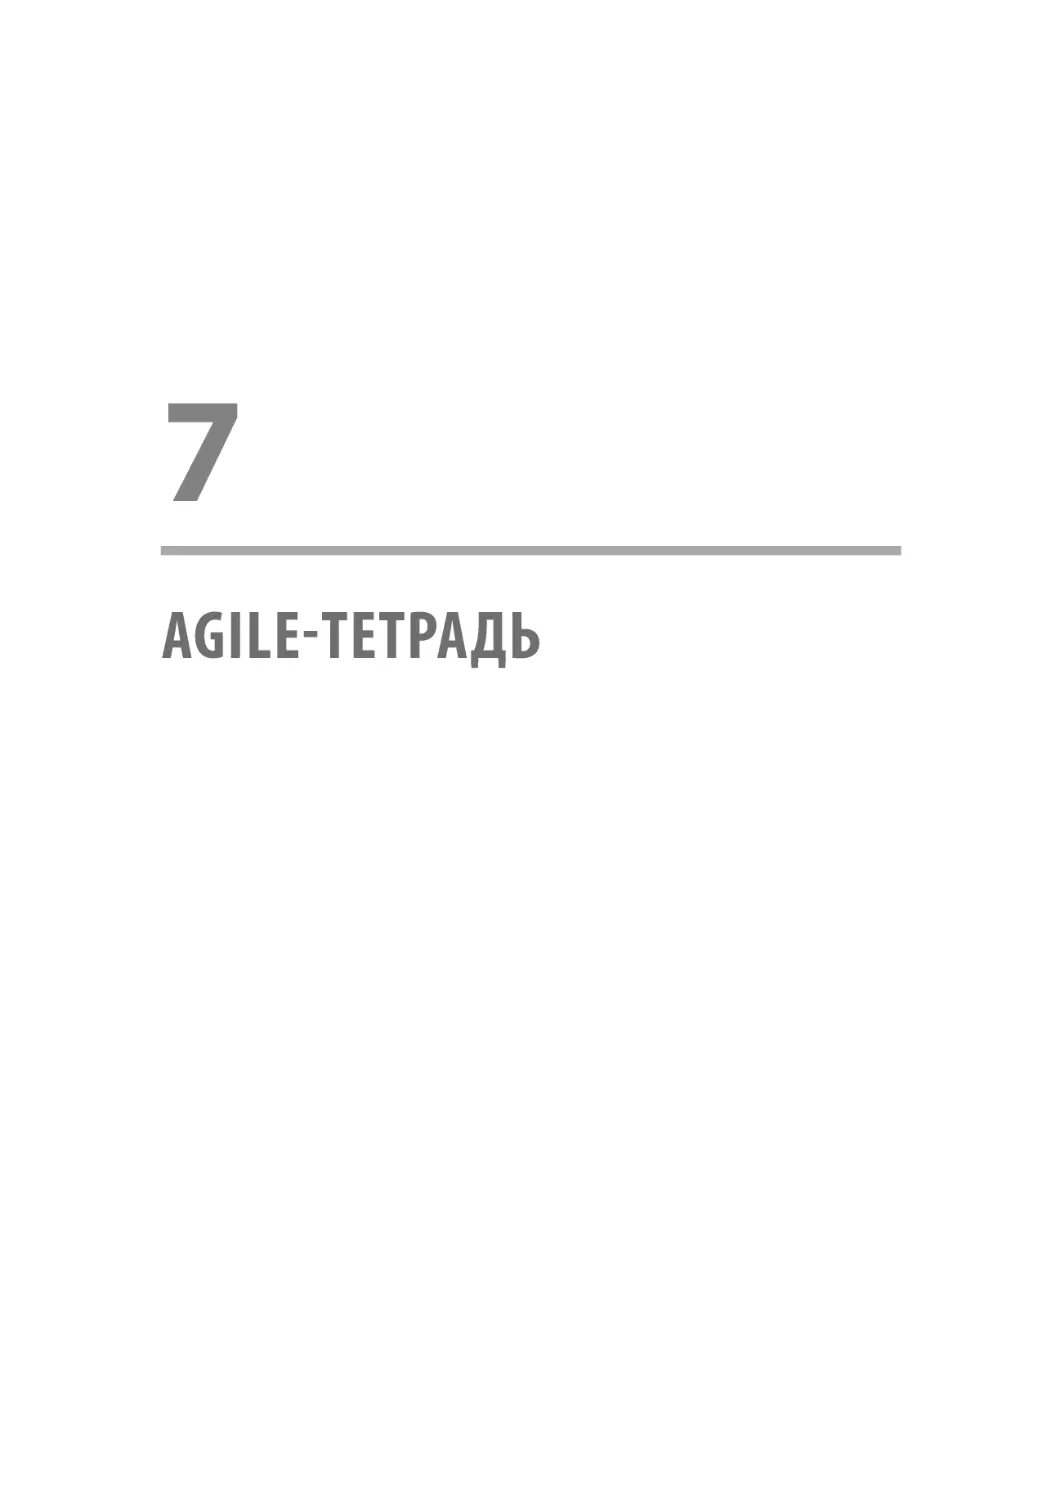 Глава 7. Agile-тетрадь